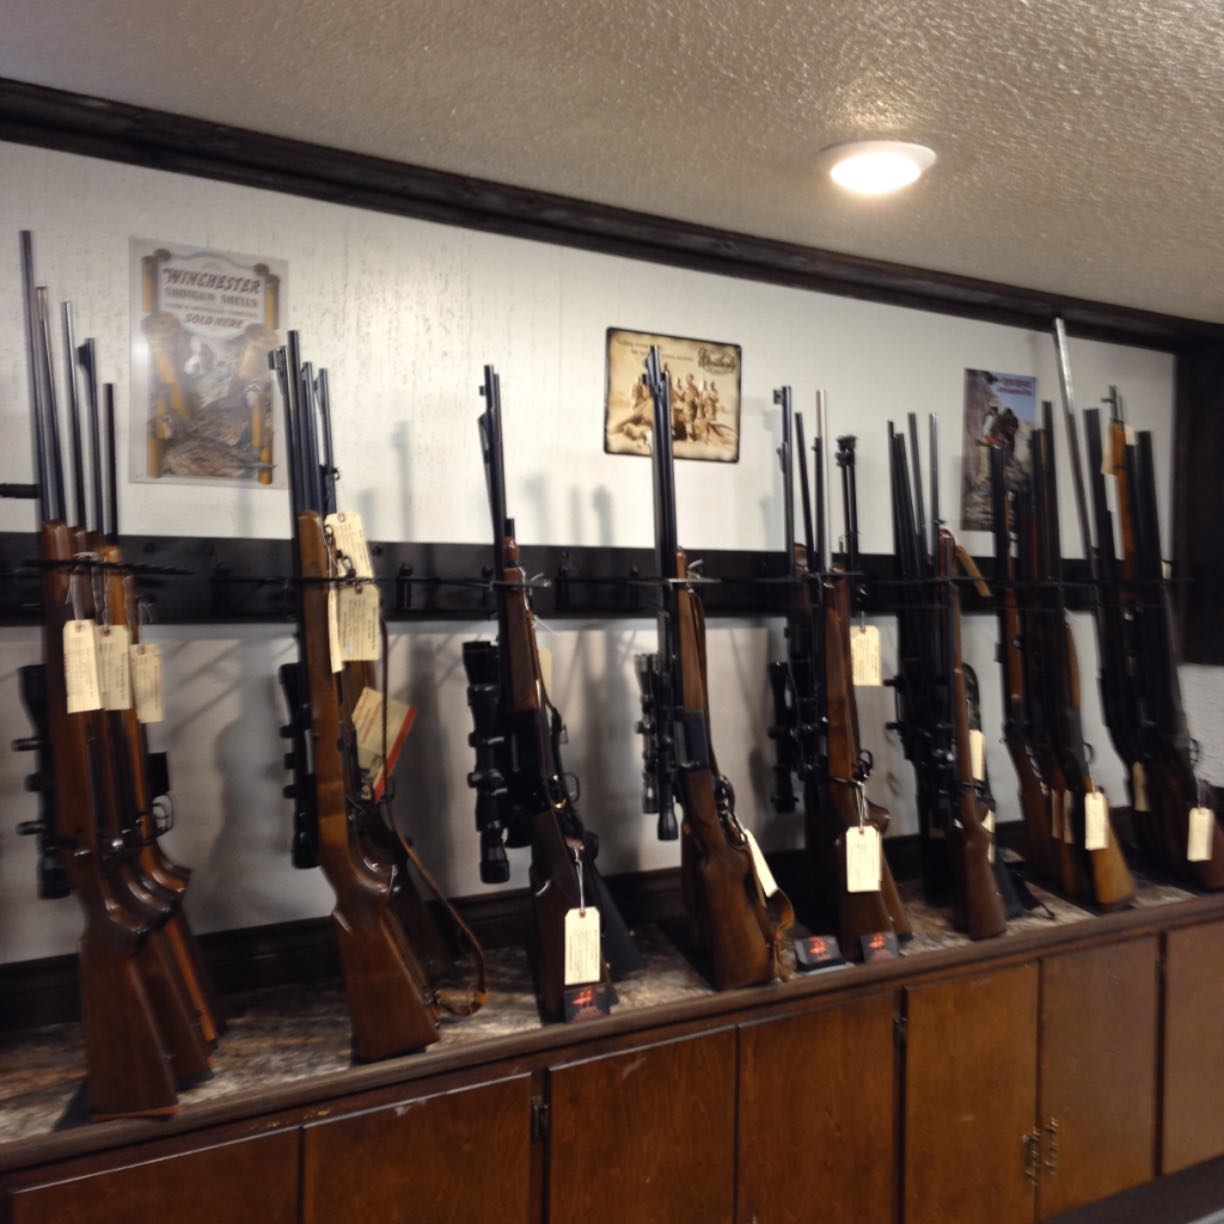 Hafer's Gunsmithing Inc. Coupons near me in Hagerstown ...